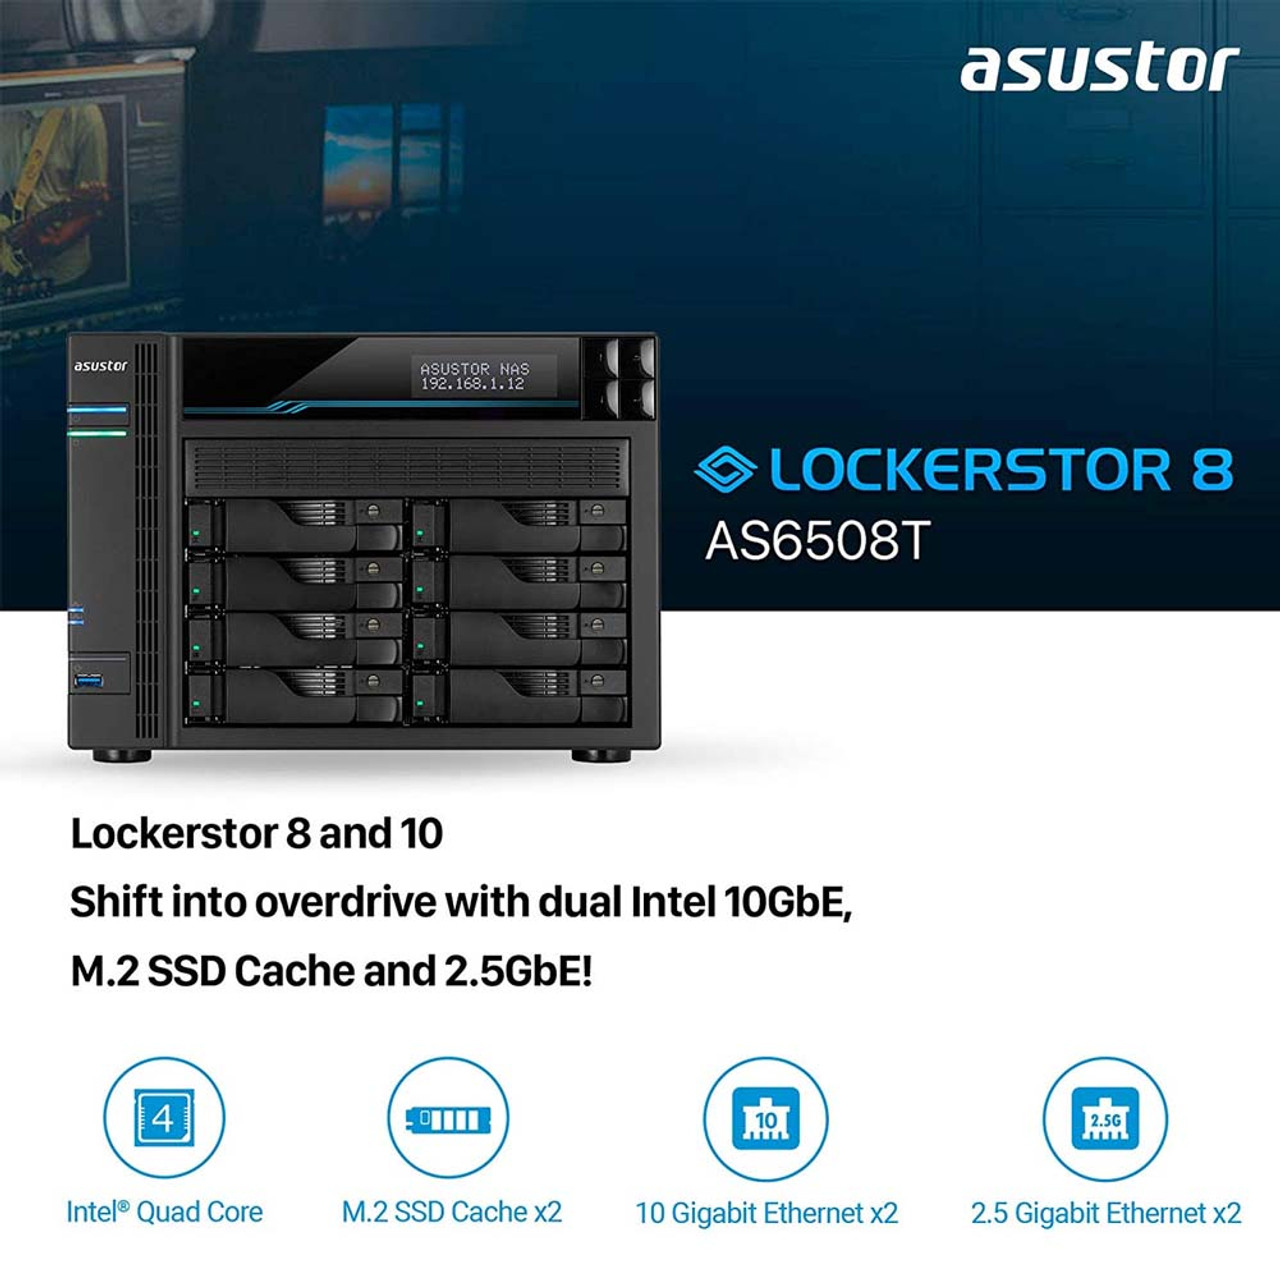 Asustor Lockerstor 8 AS6508T review: A speedy customer